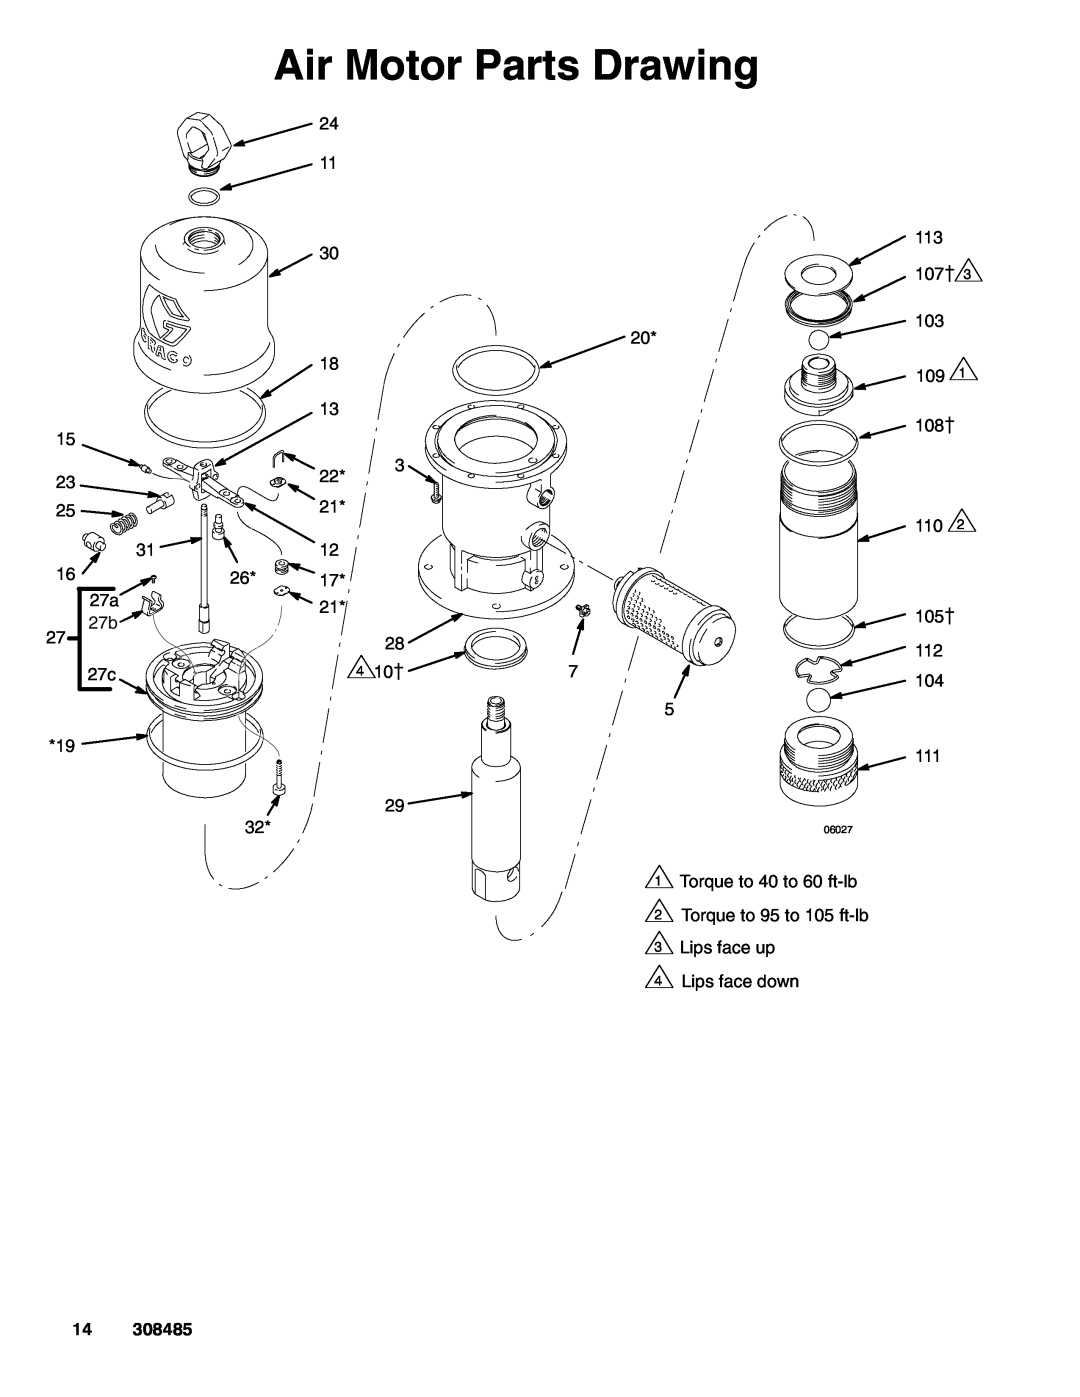 Graco Series B, 237526 dimensions Air Motor Parts Drawing 